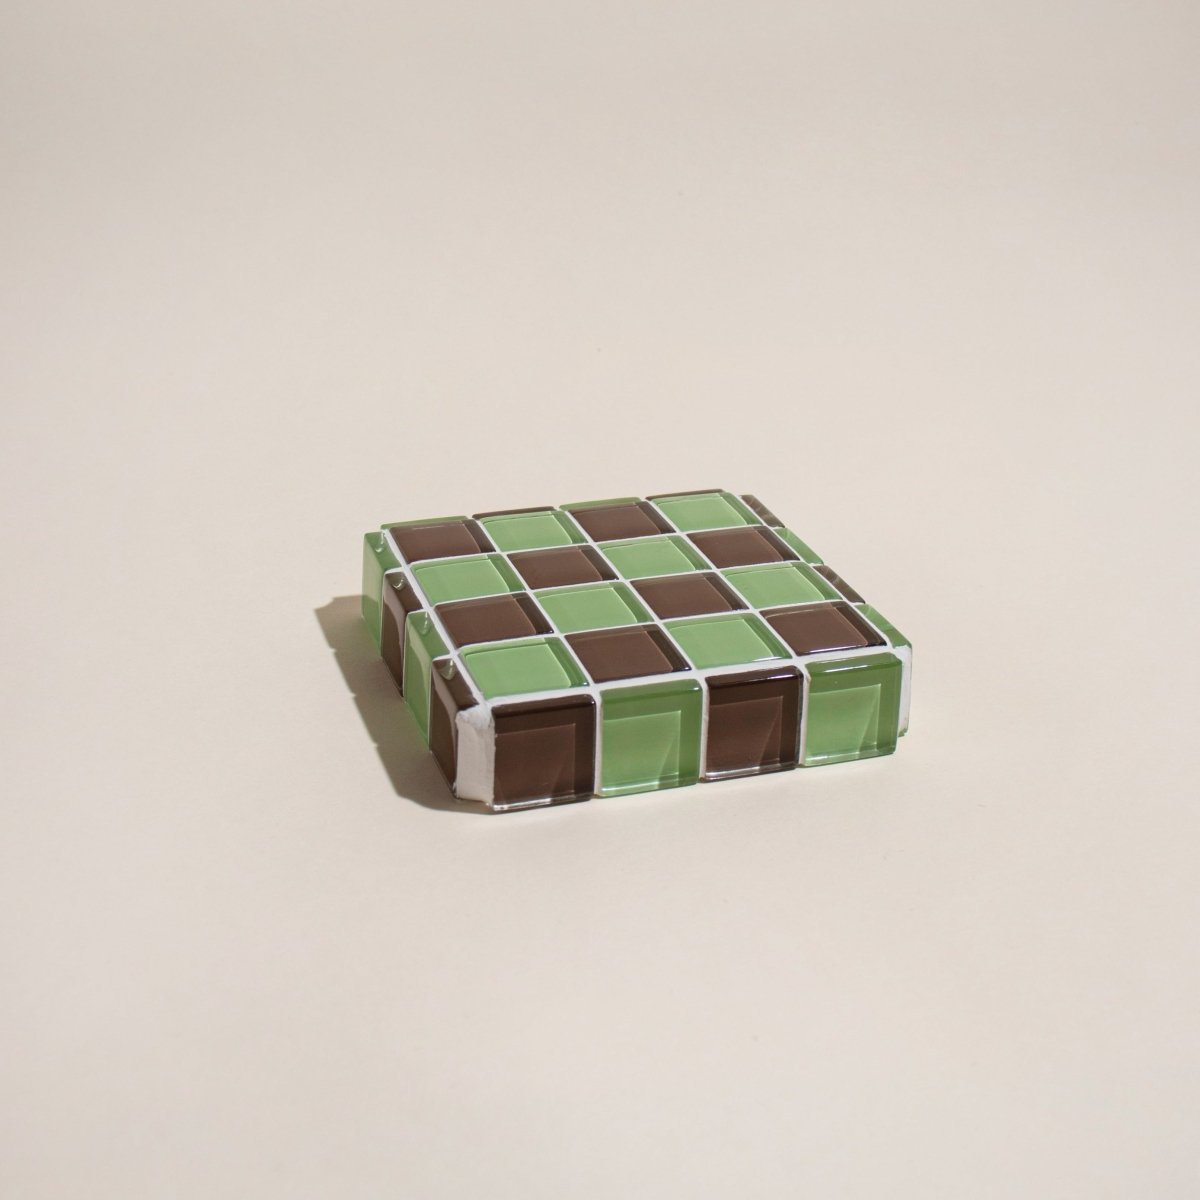 Subtle Art Studios Glass Tile Cube - Mint Dark Chocolate - lily & onyx